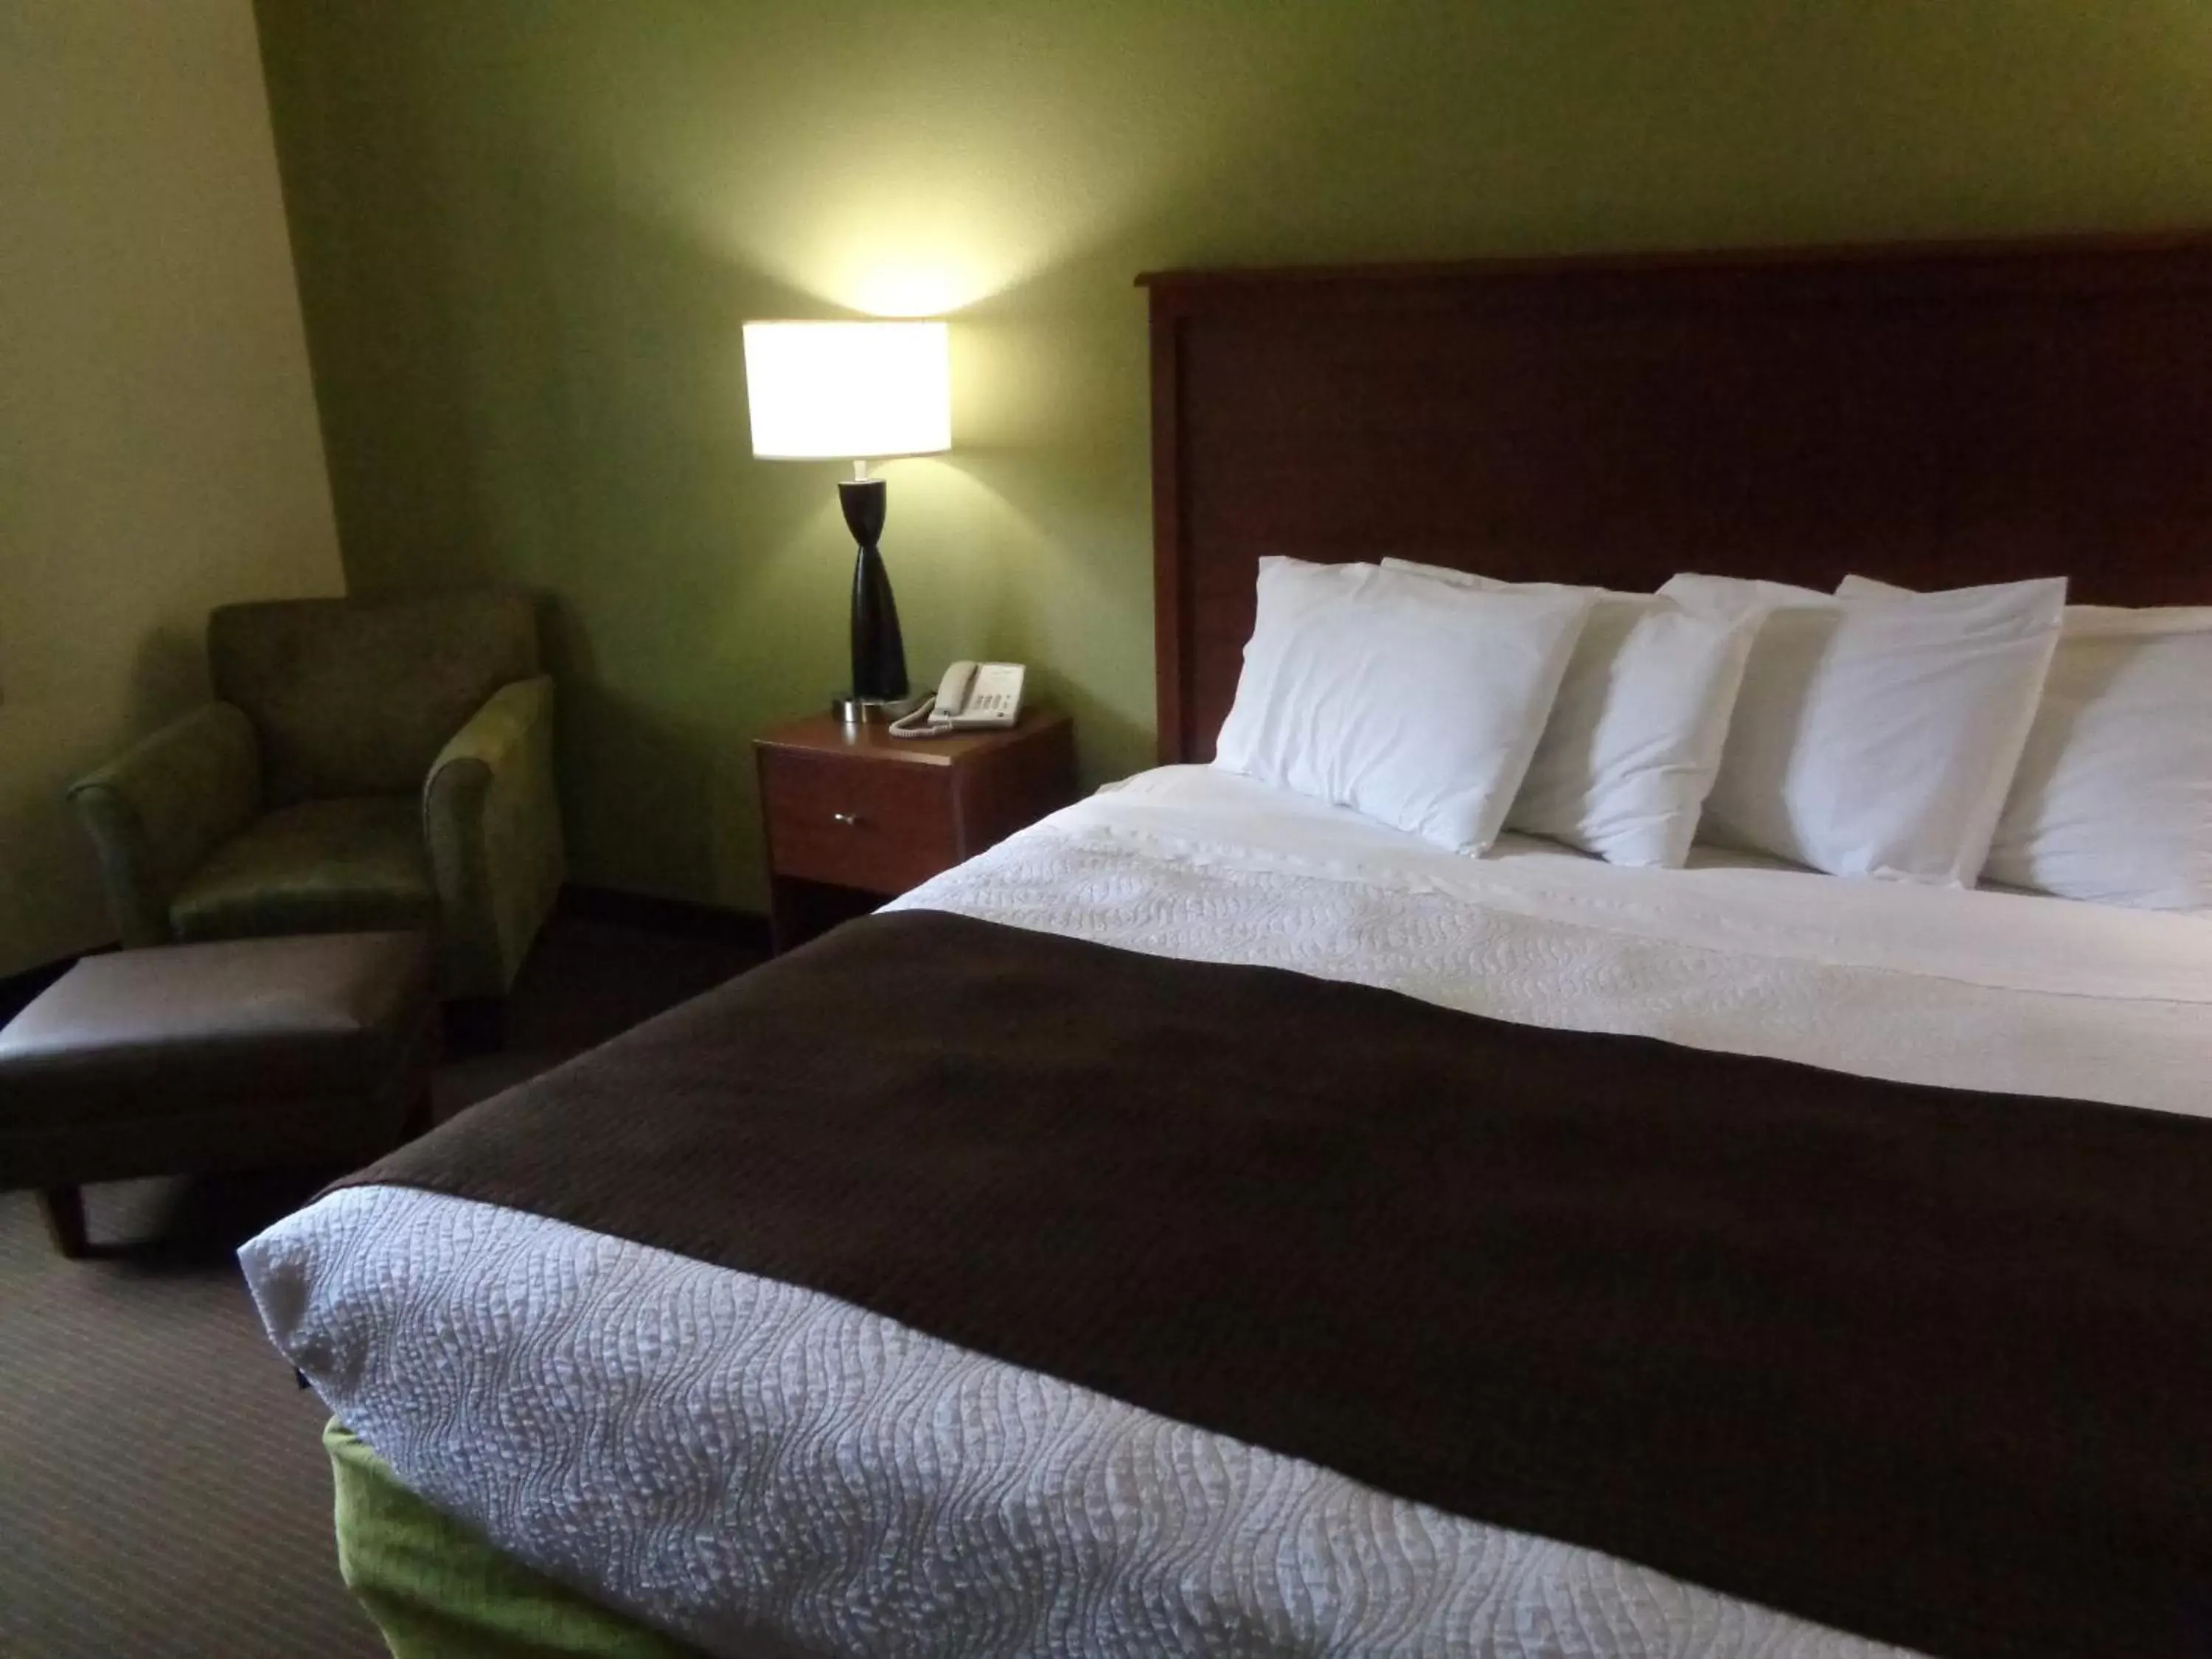 Bedroom, Bed in AmericInn by Wyndham Grand Rapids